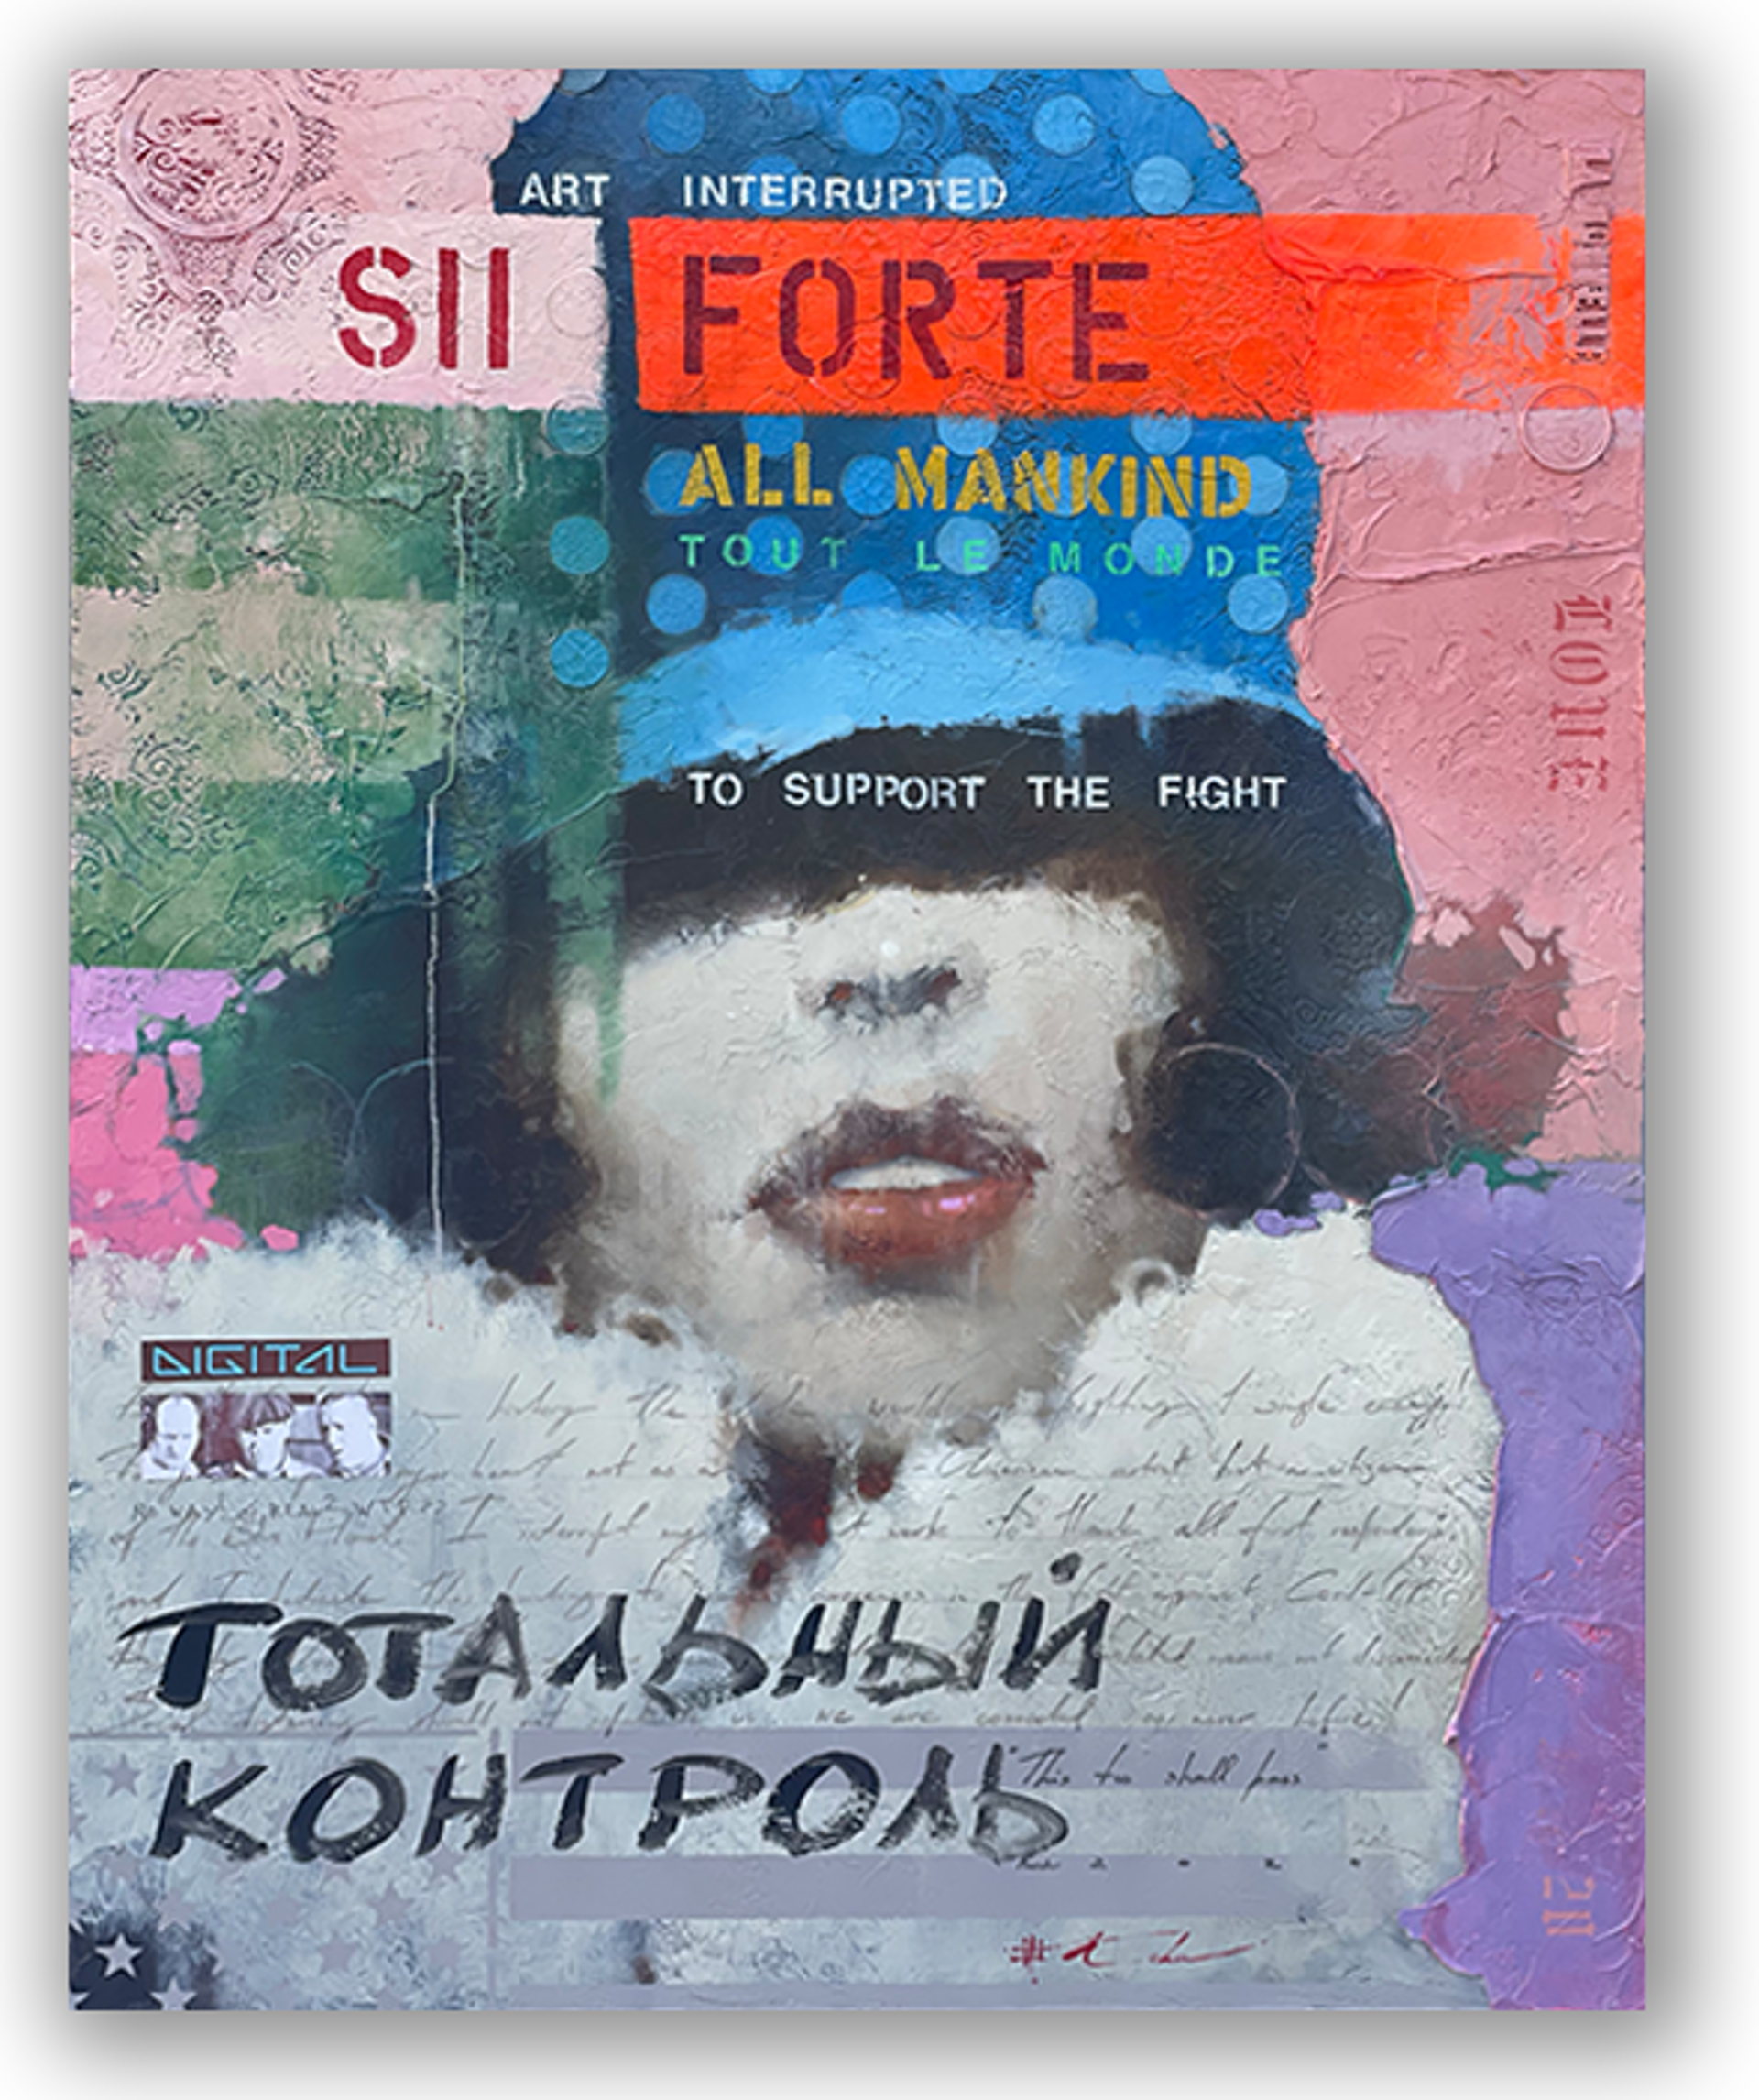 "Sii Forte" by Andre Kohn